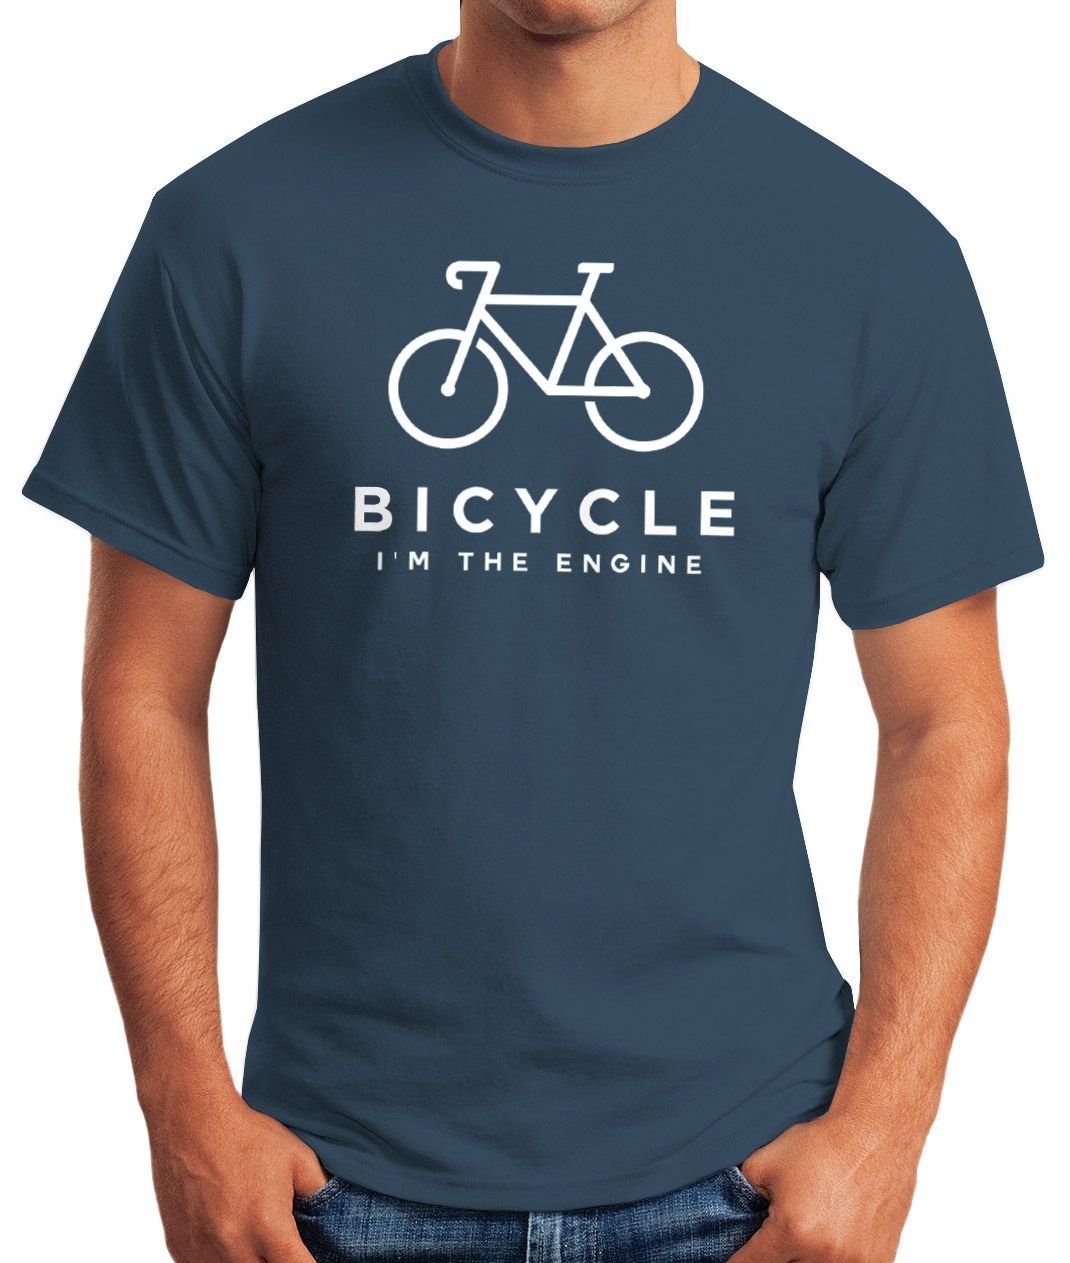 MoonWorks Print-Shirt Bike Rad the Fun-Shirt Print Bicycle I'm T-Shirt mit Fahrrad Engine lustig Herren Sprüche blau Moonworks® Spruch